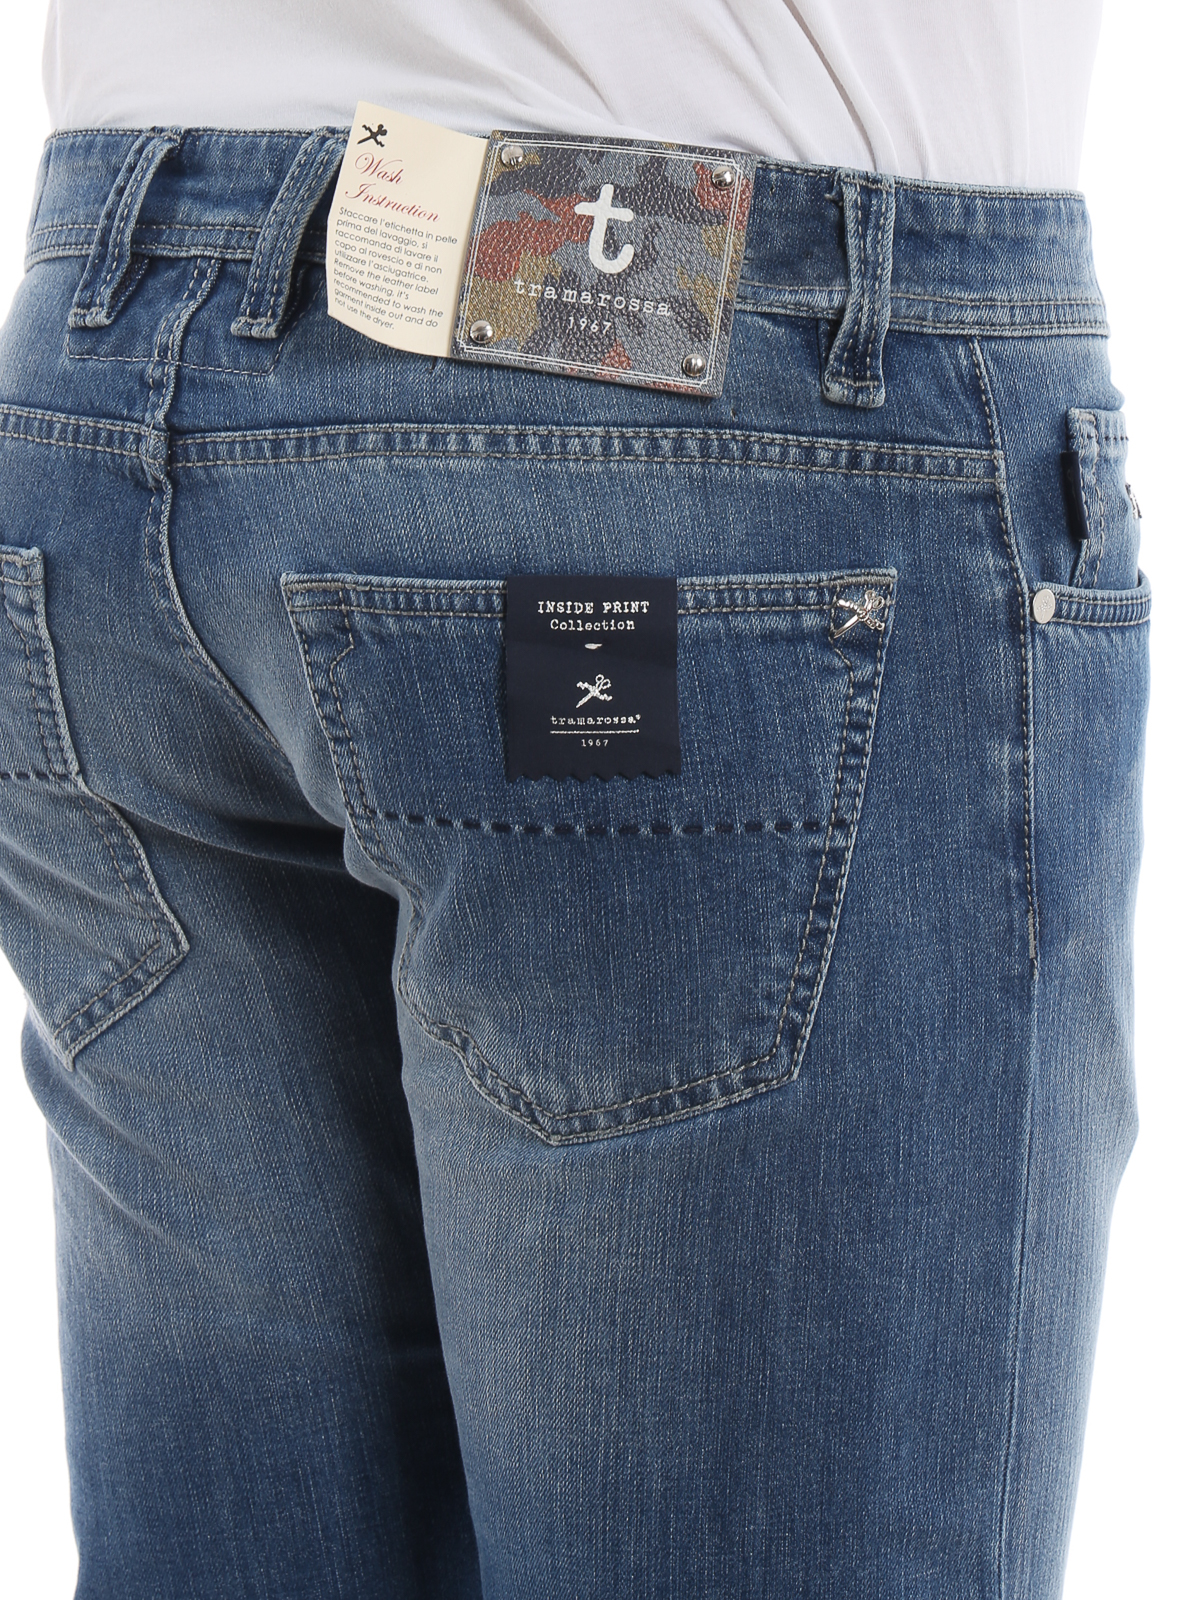 Recover Unparalleled Step Straight leg jeans Tramarossa - 19-80 light wash denim jeans -  21UB51980D214S9E20